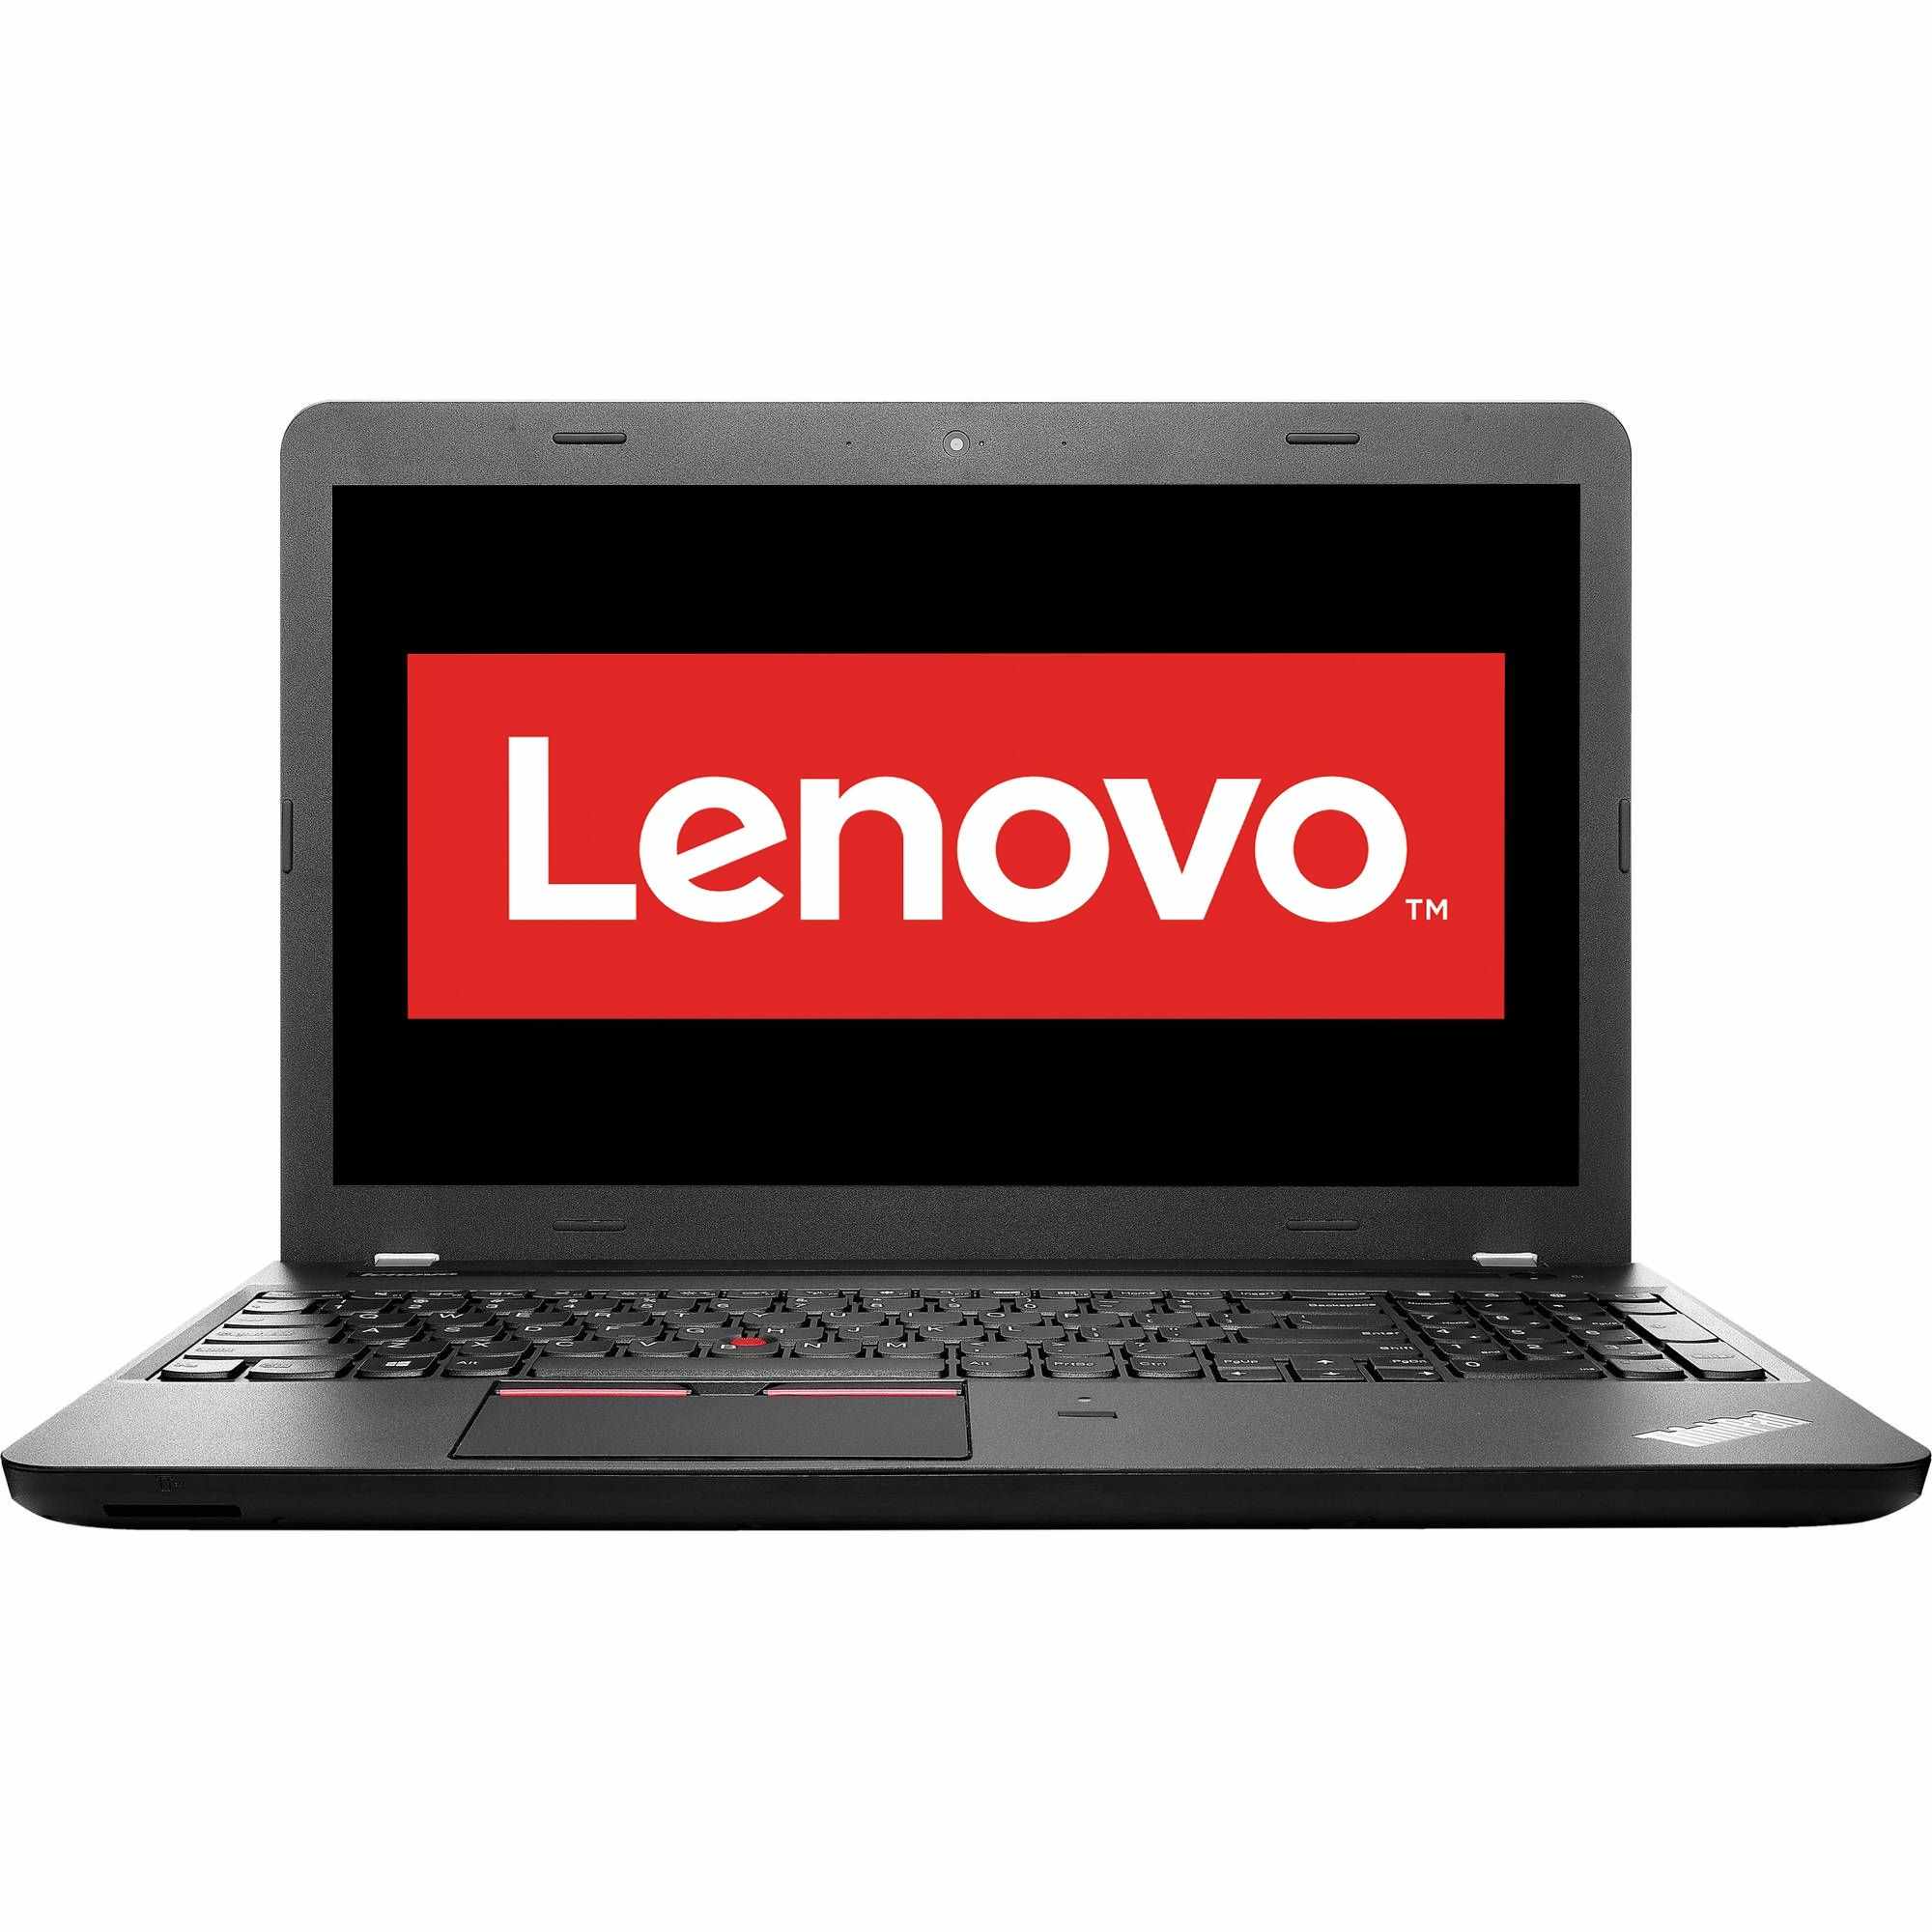 Laptop Lenovo ThinkPad E550, Intel Core i7-5500U 2.40GHz, 4GB DDR3, 240GB SSD, DVD-RW, 15.6 Inch, Webcam, Tastatura Numerica, Grad B (0310)